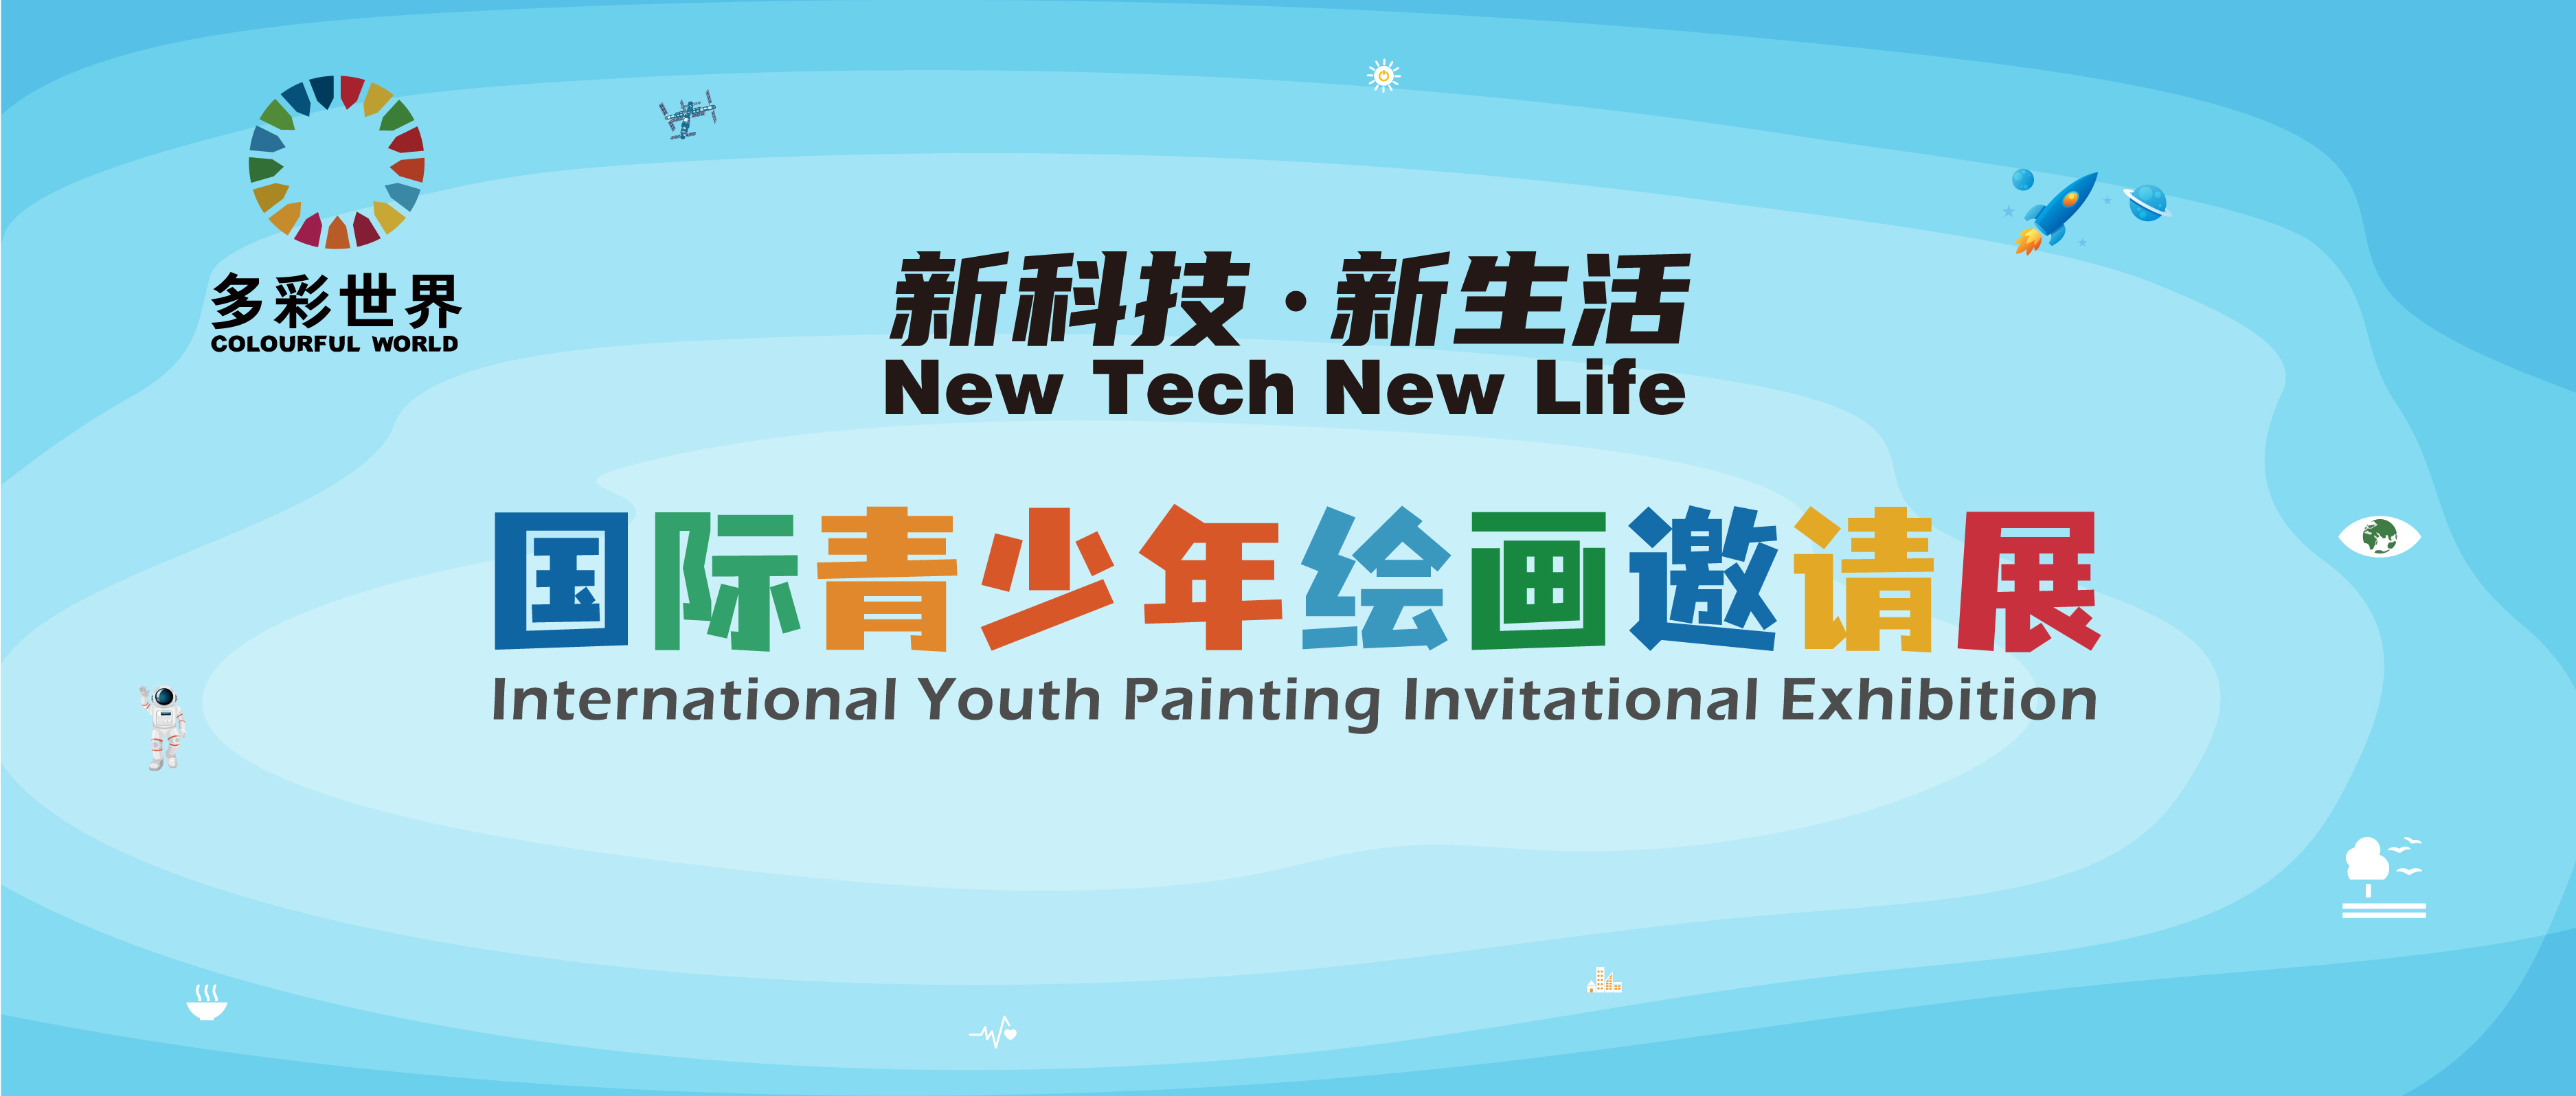 Invitation- Painting “New Tech, New Life”